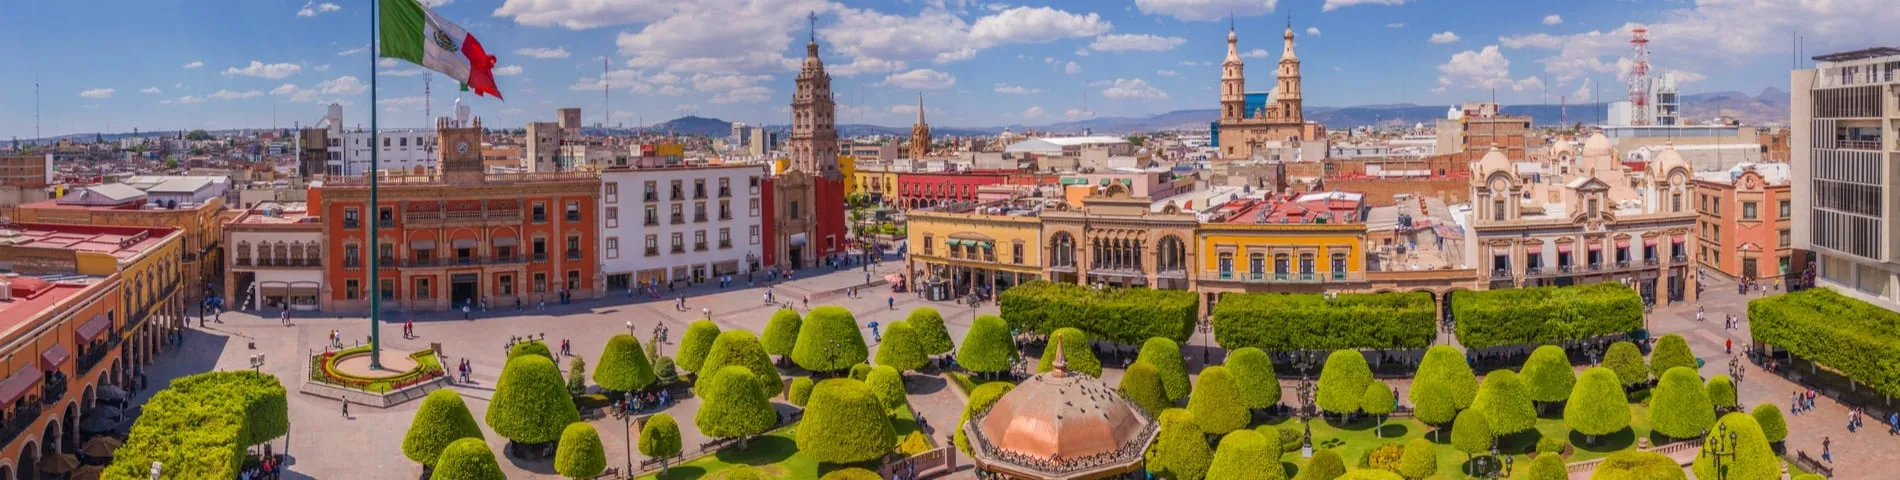 Guanajuato - Curs estàndard